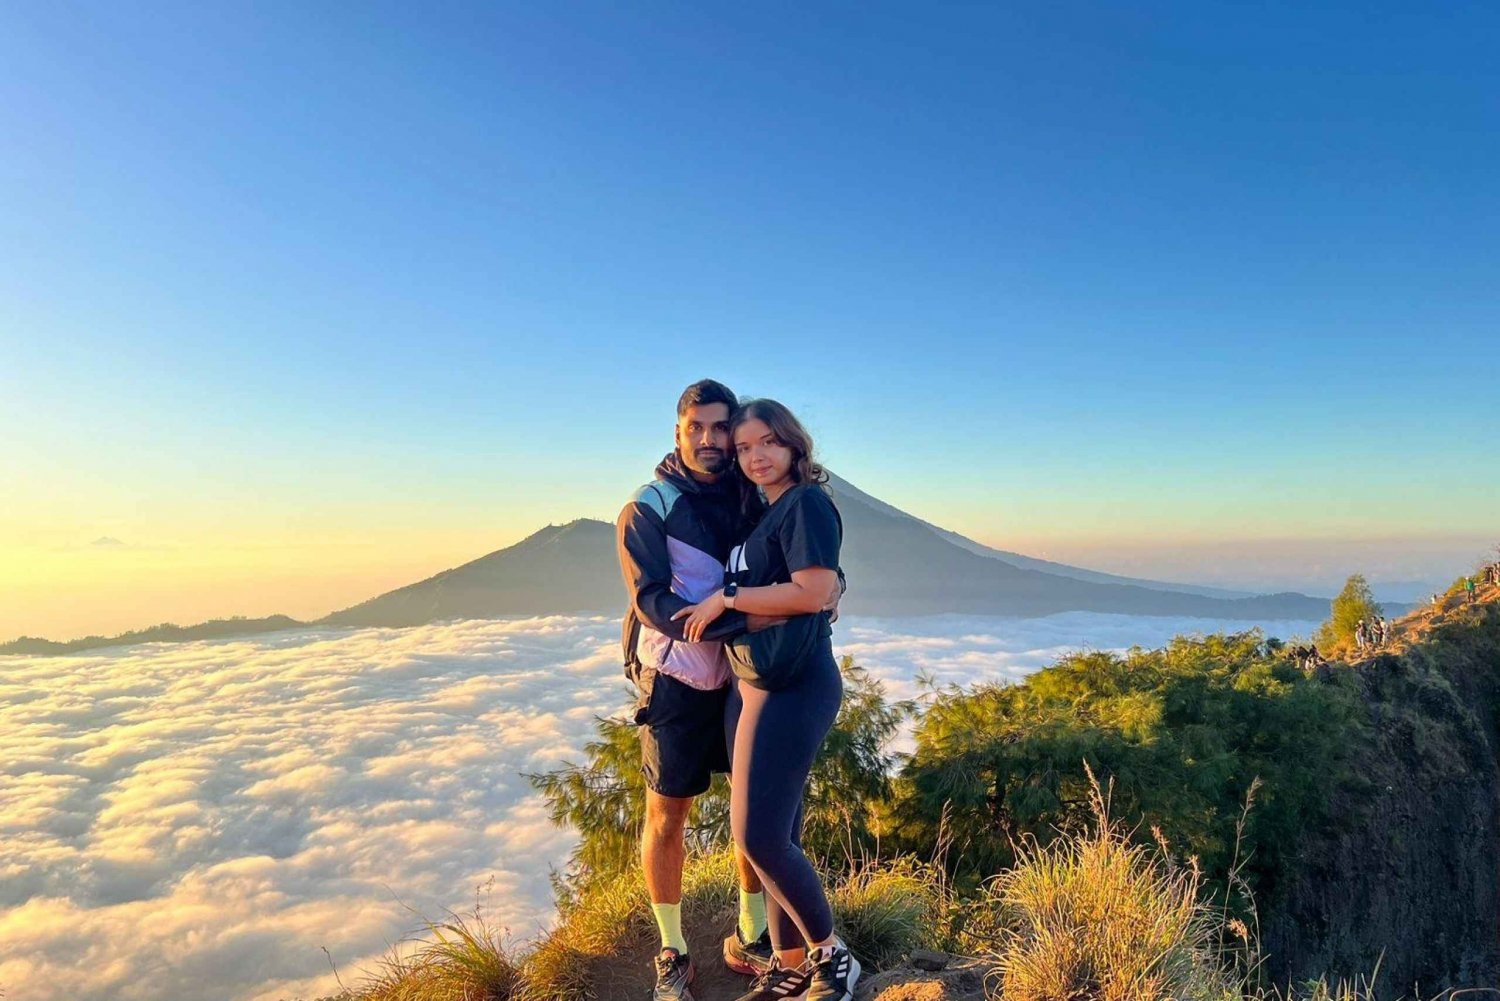 Bali : All Inclusive Mount Batur Sunrise Hike & Hot Spring